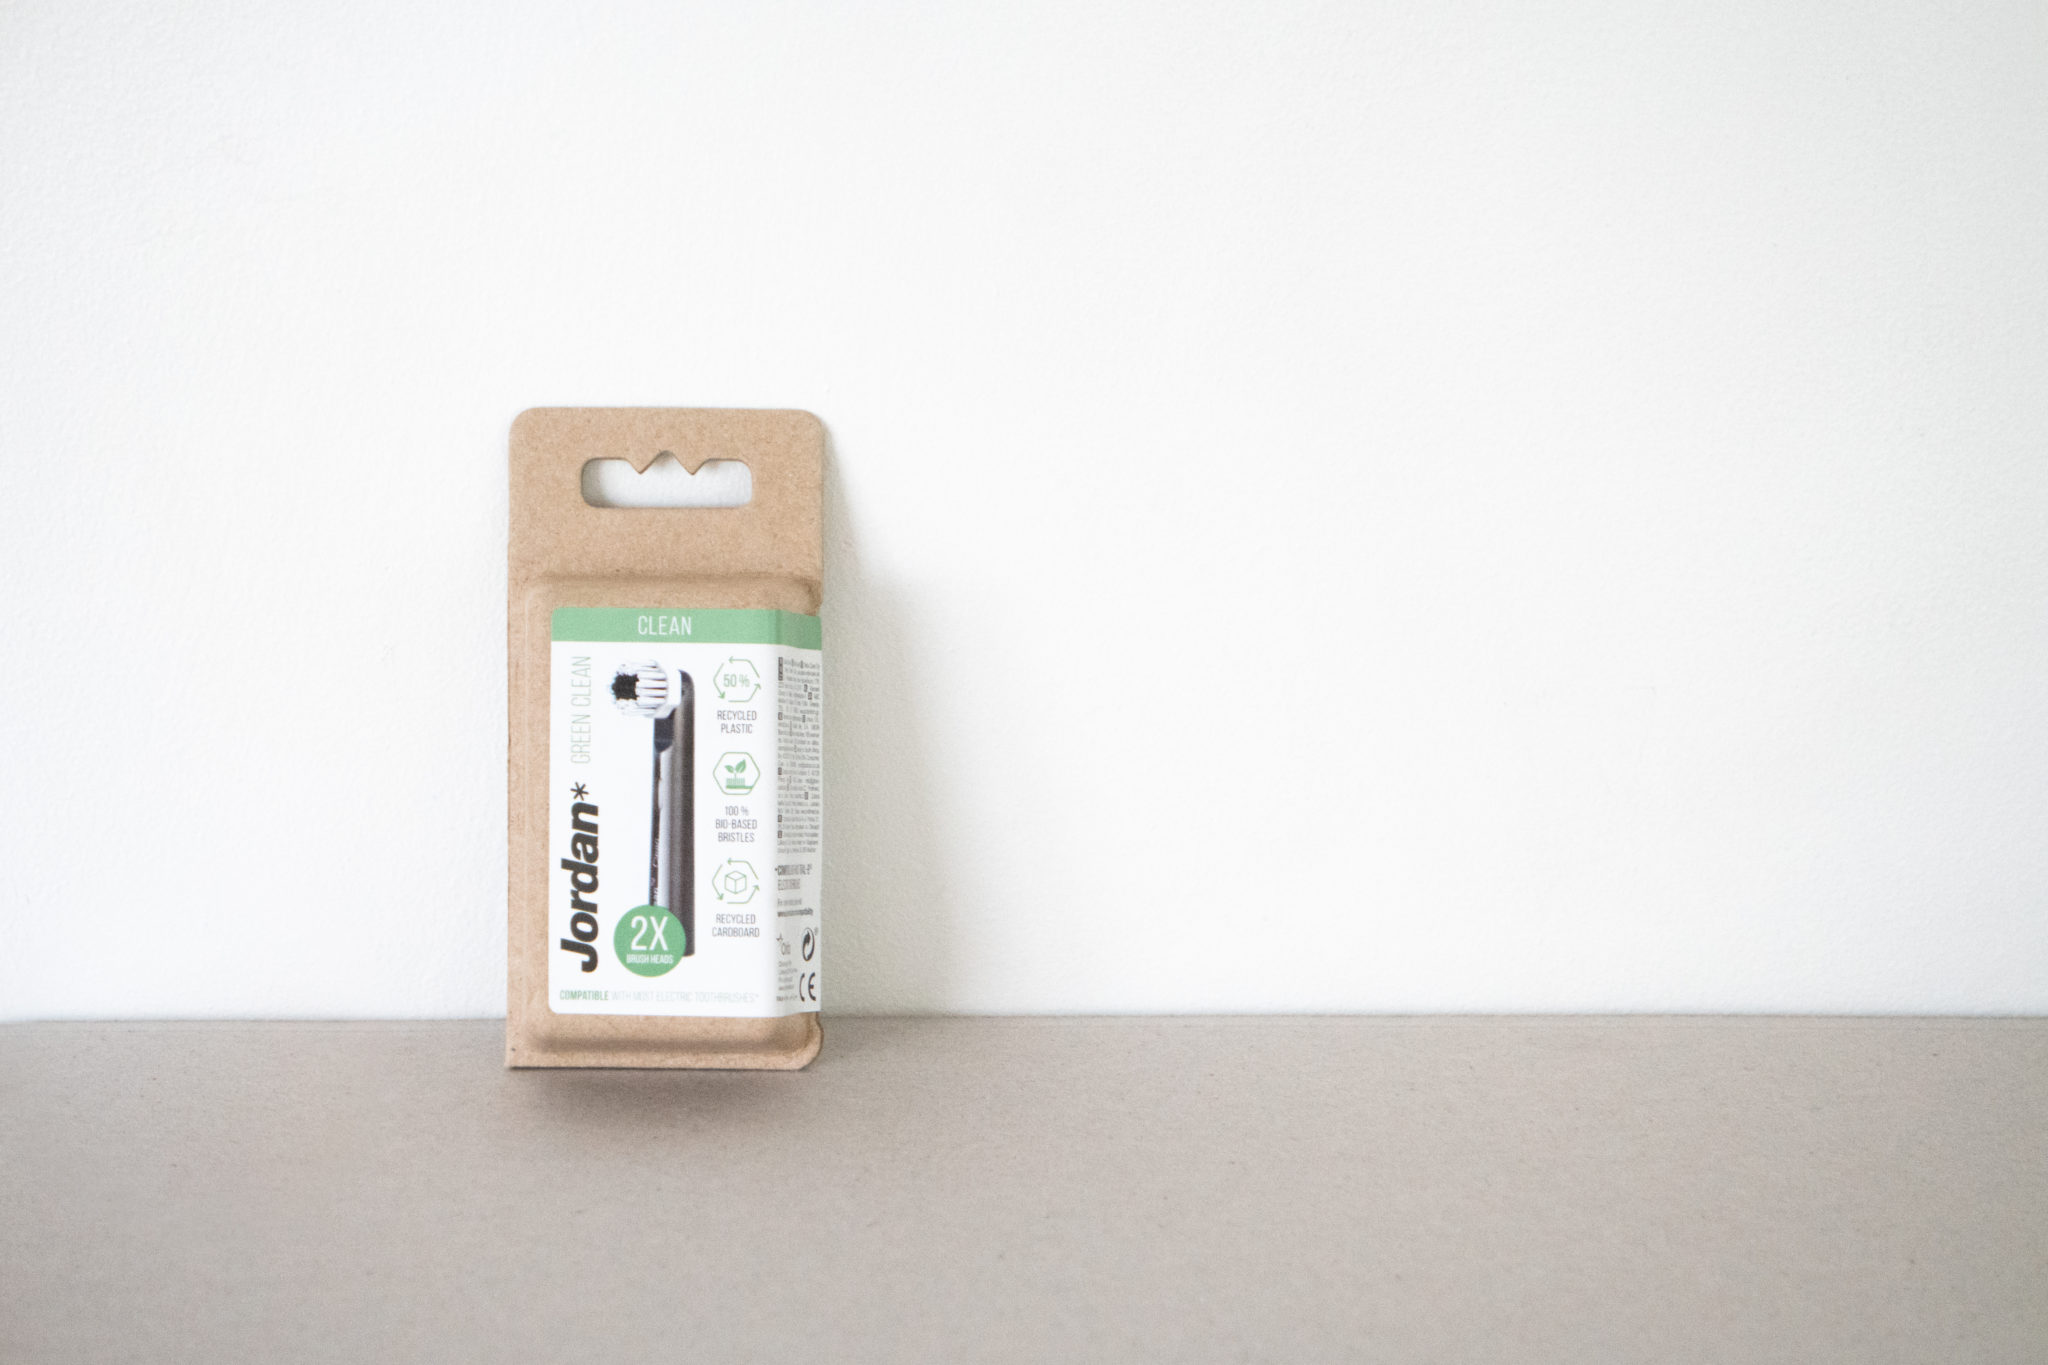 børstehoder til elektrisk tannbørste i miljøvennlig pakning på benk